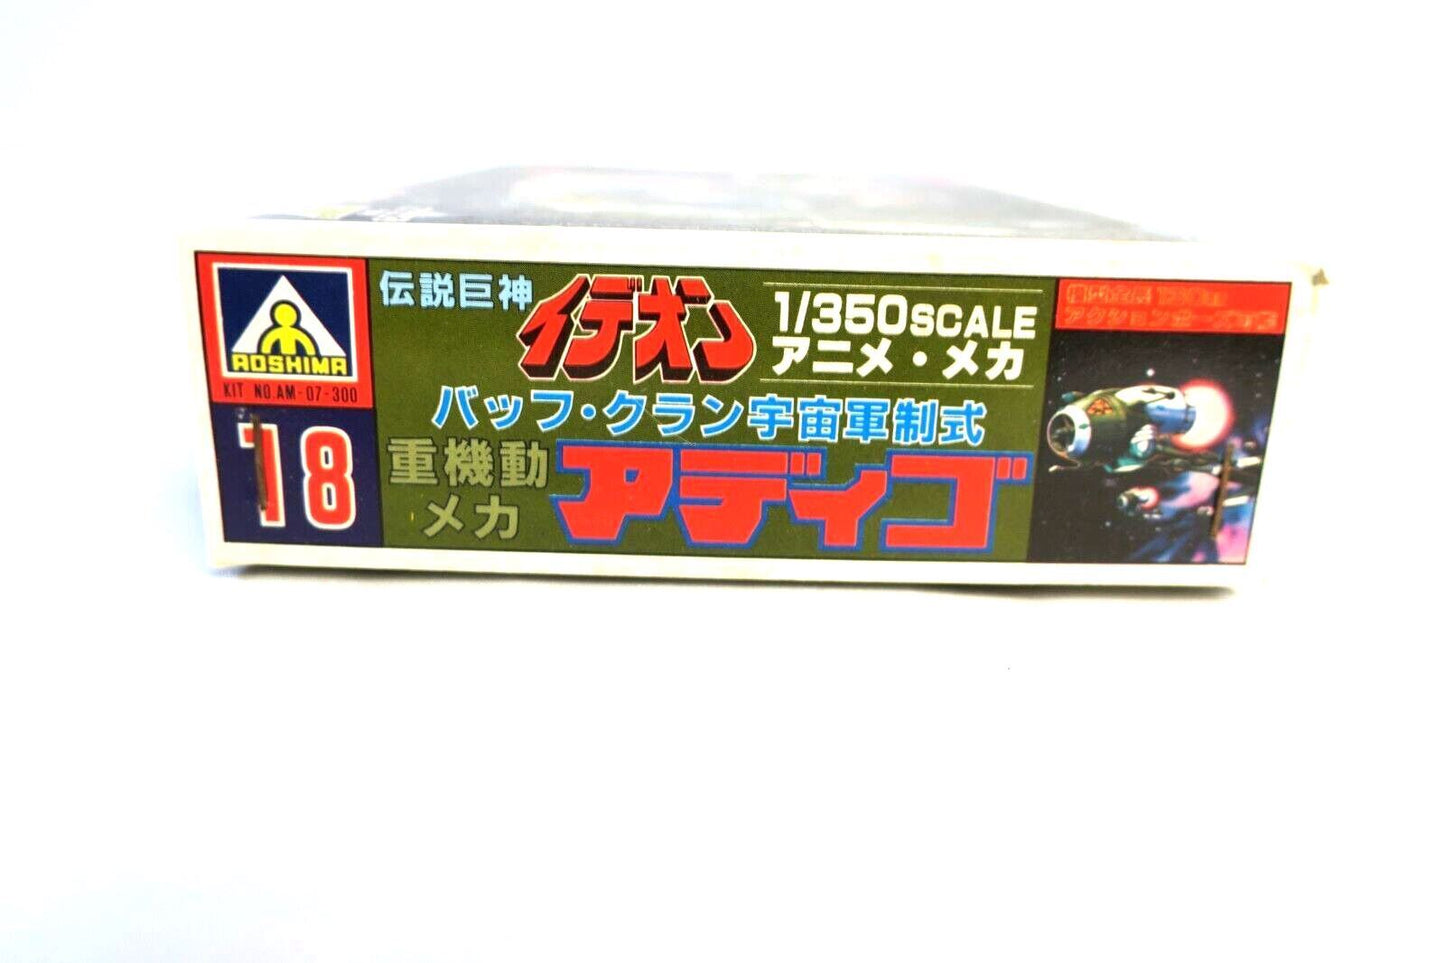 Aoshima Space Runaway Ideon Adigo AM-07-300 18 1/350 Scale Model Kit E20